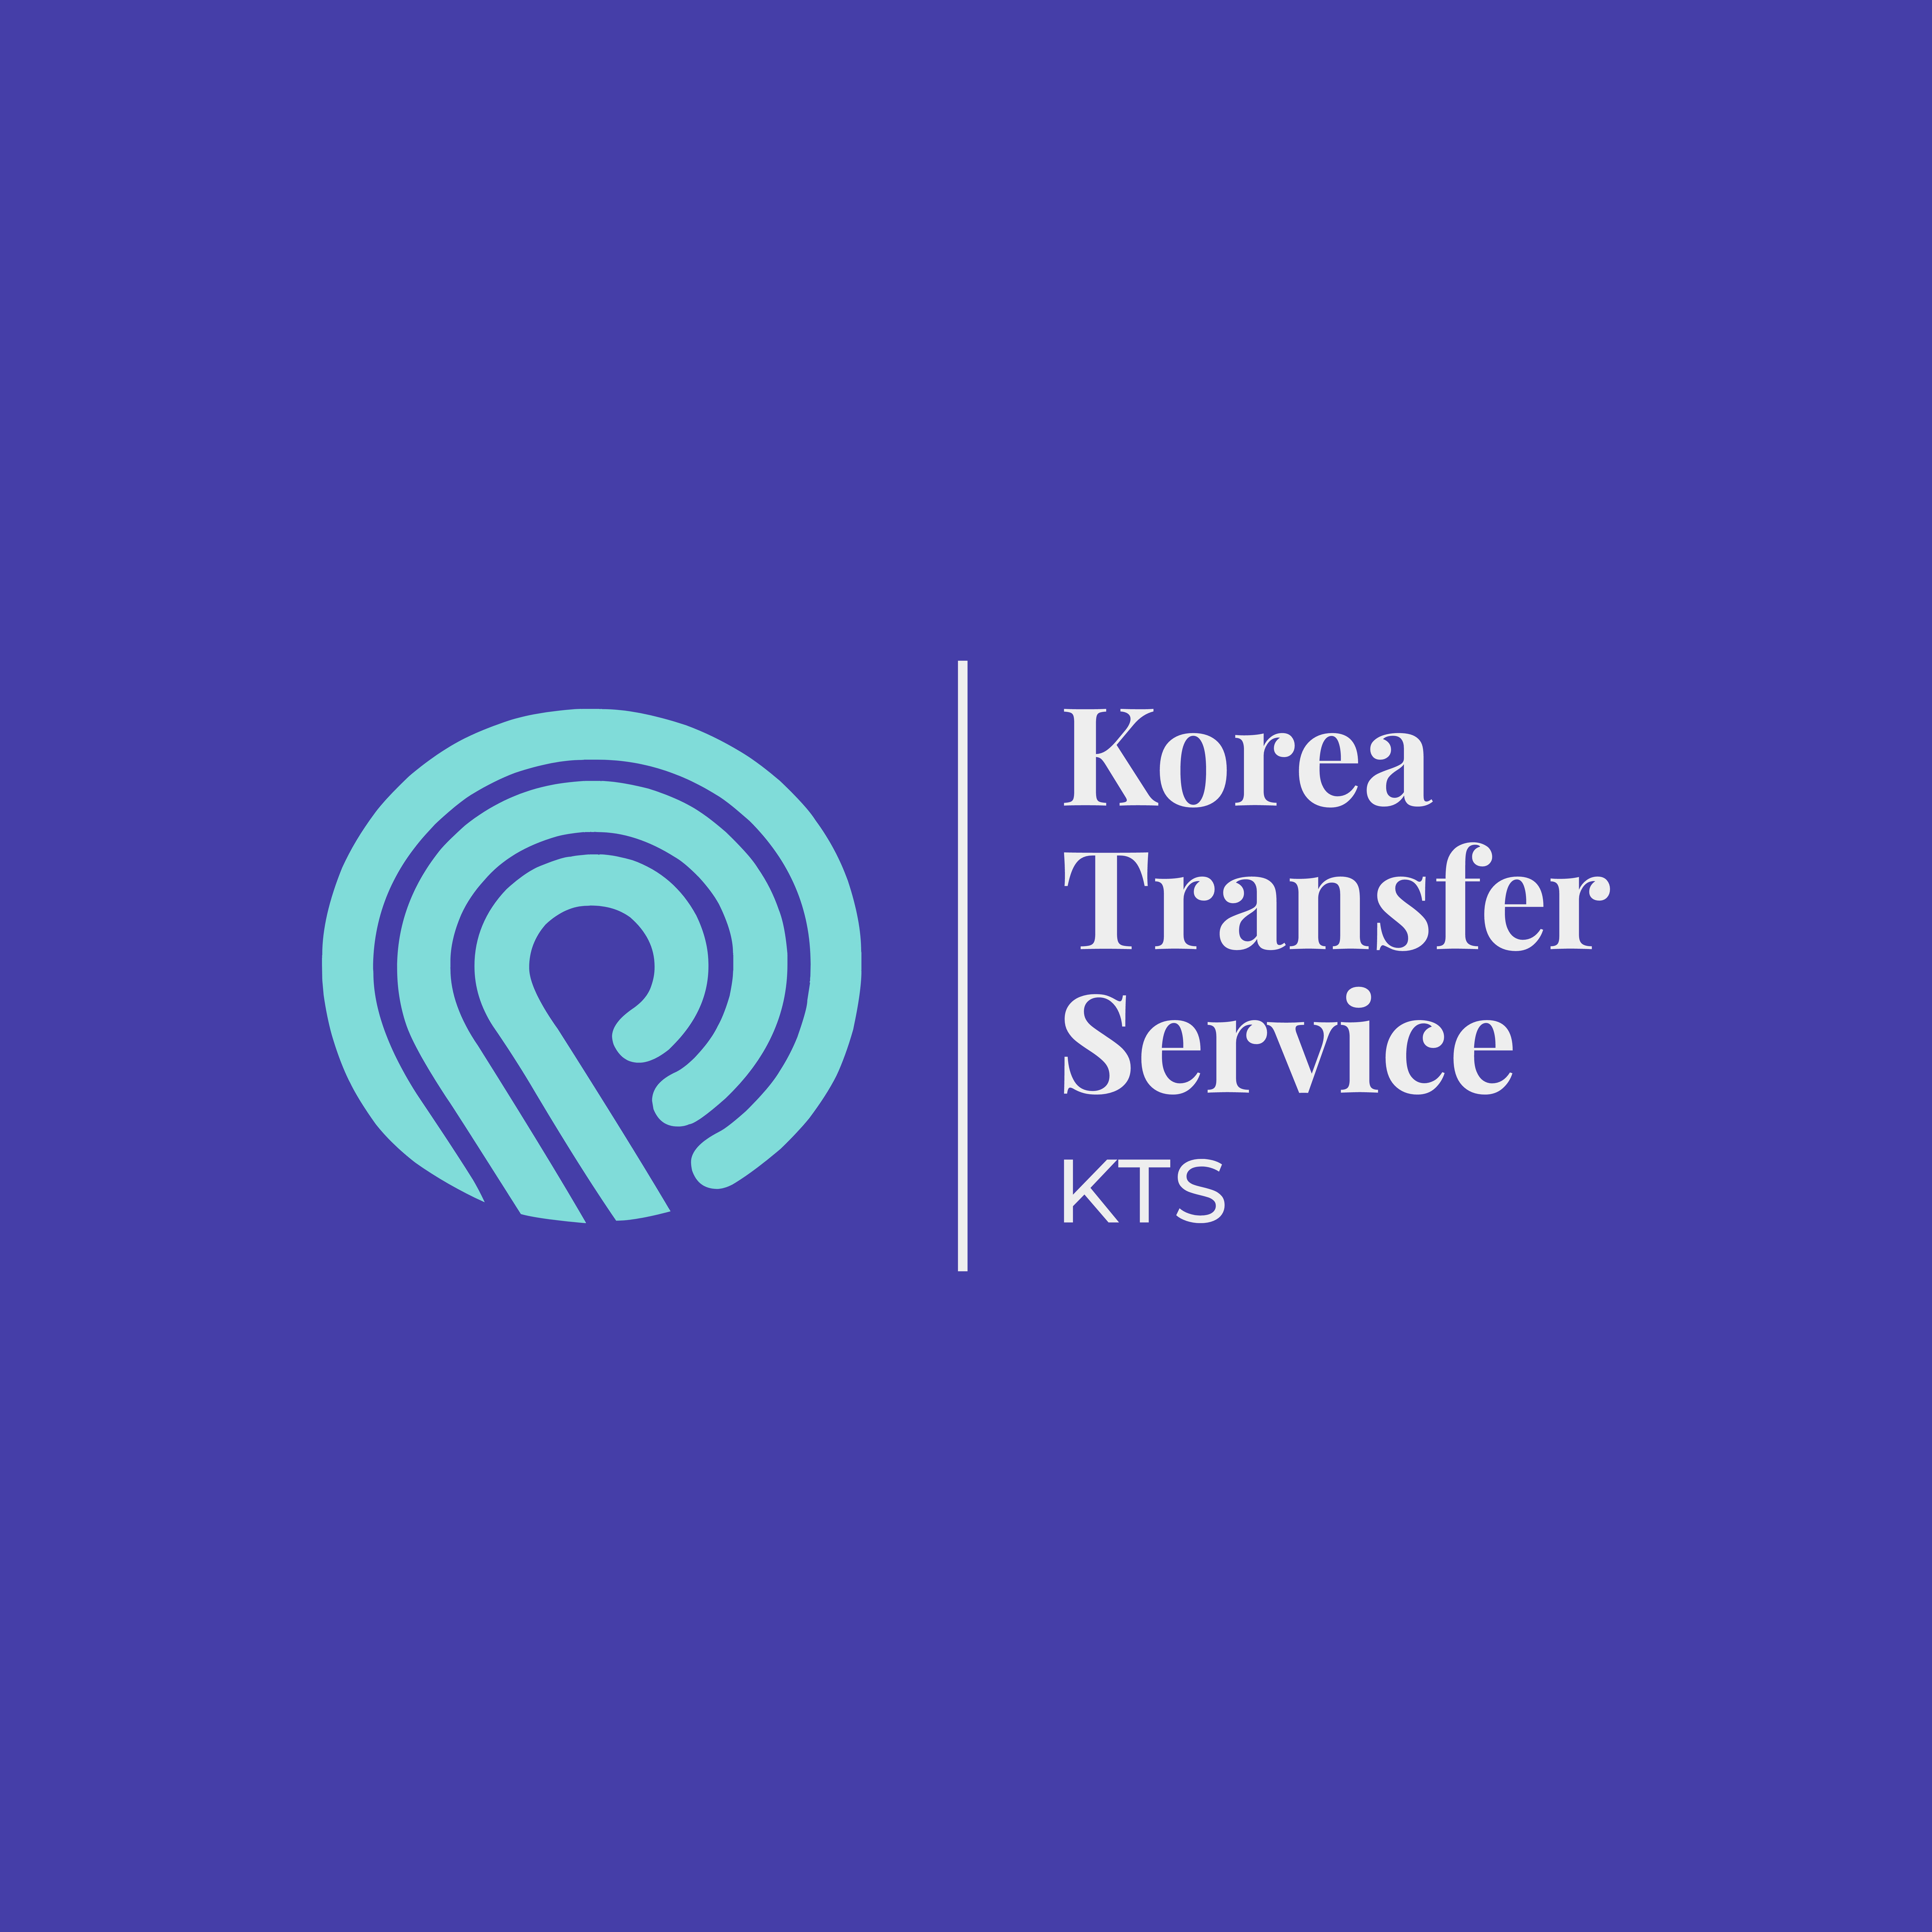 Korea Transfer Service